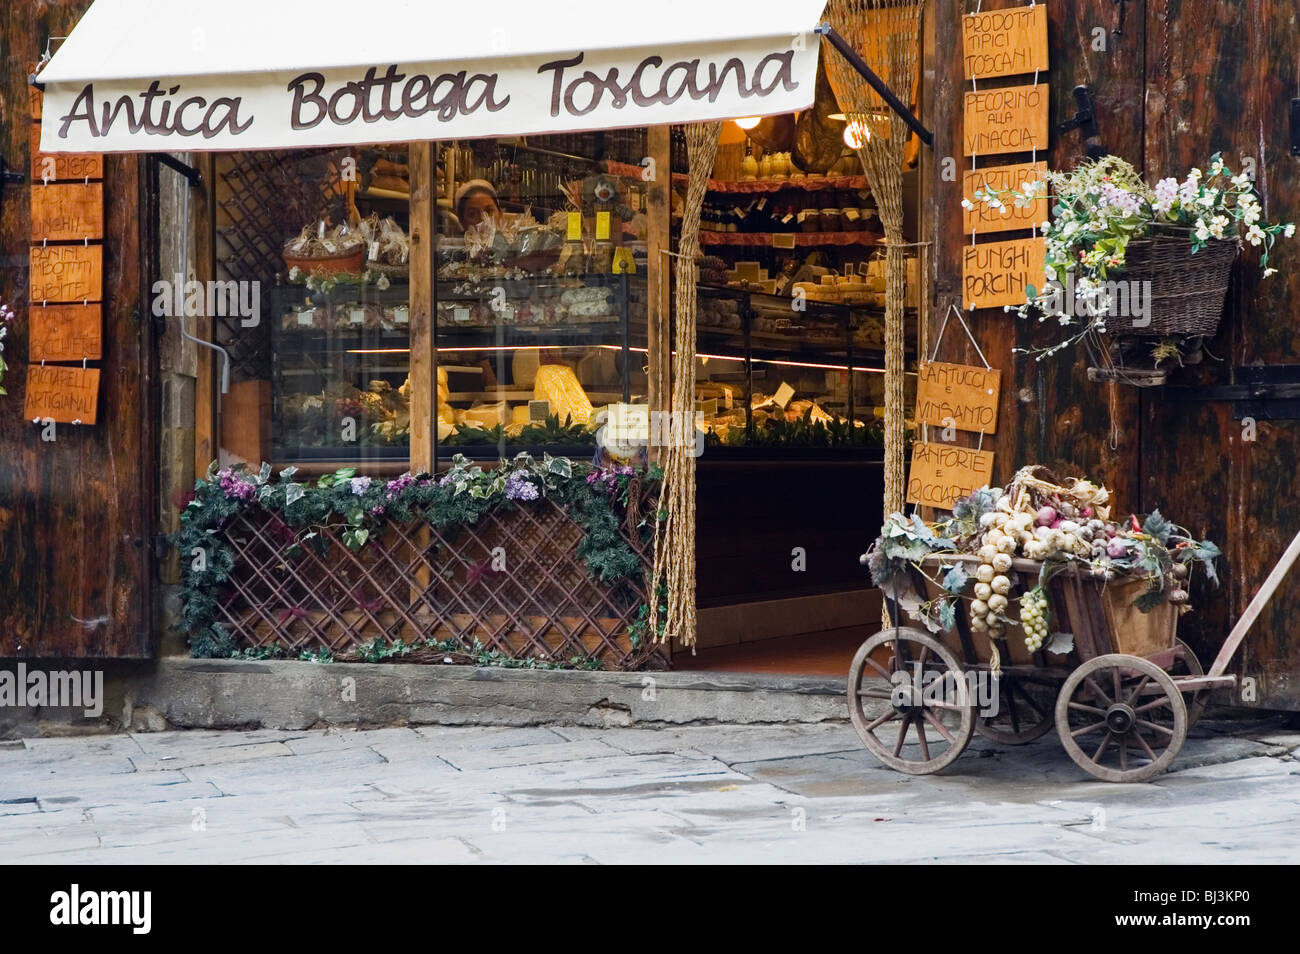 Delicatessen shop, Antica Bottega Tuscany, Arezzo, Tuscany, Italy, Europe Stock Photo